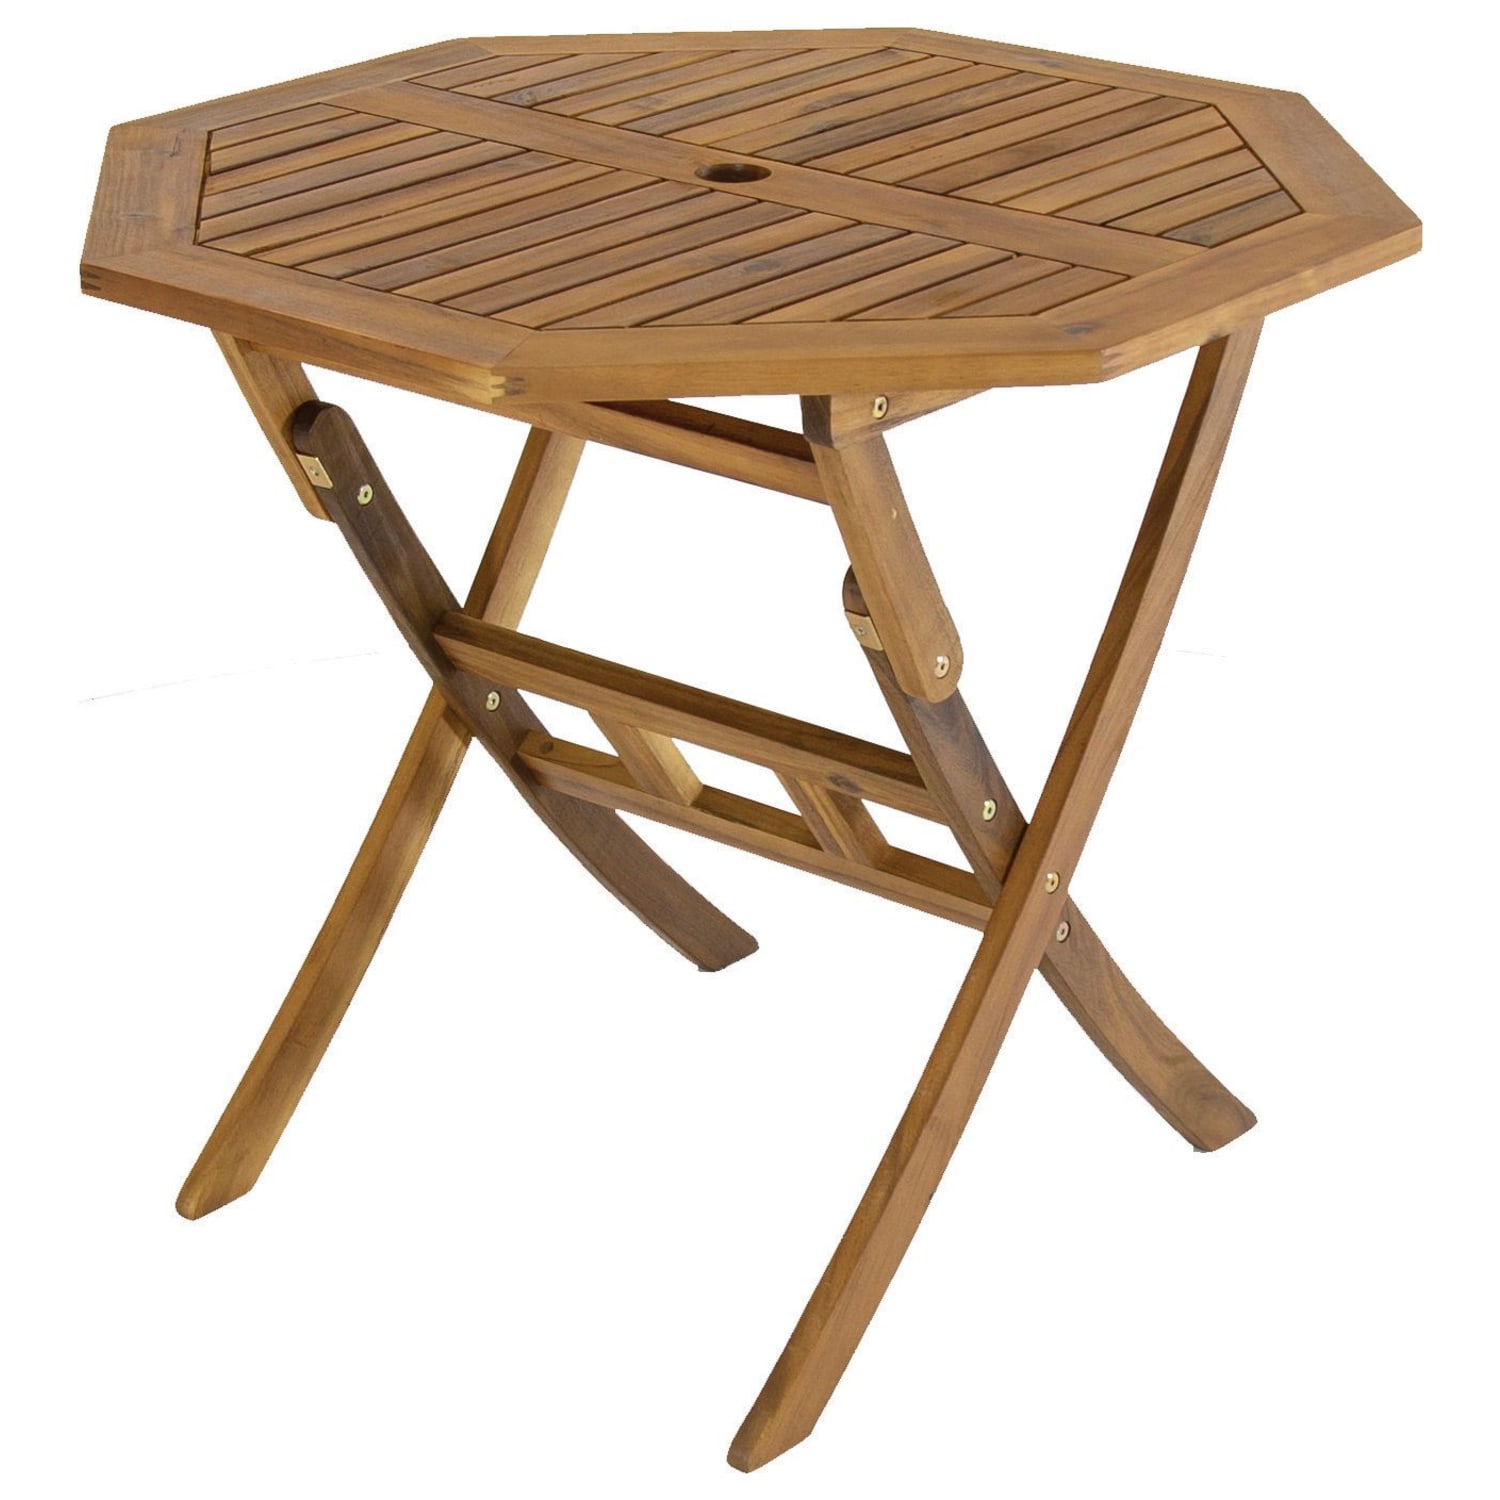 charles bentley fsc acacia wooden octagonal foldable garden table